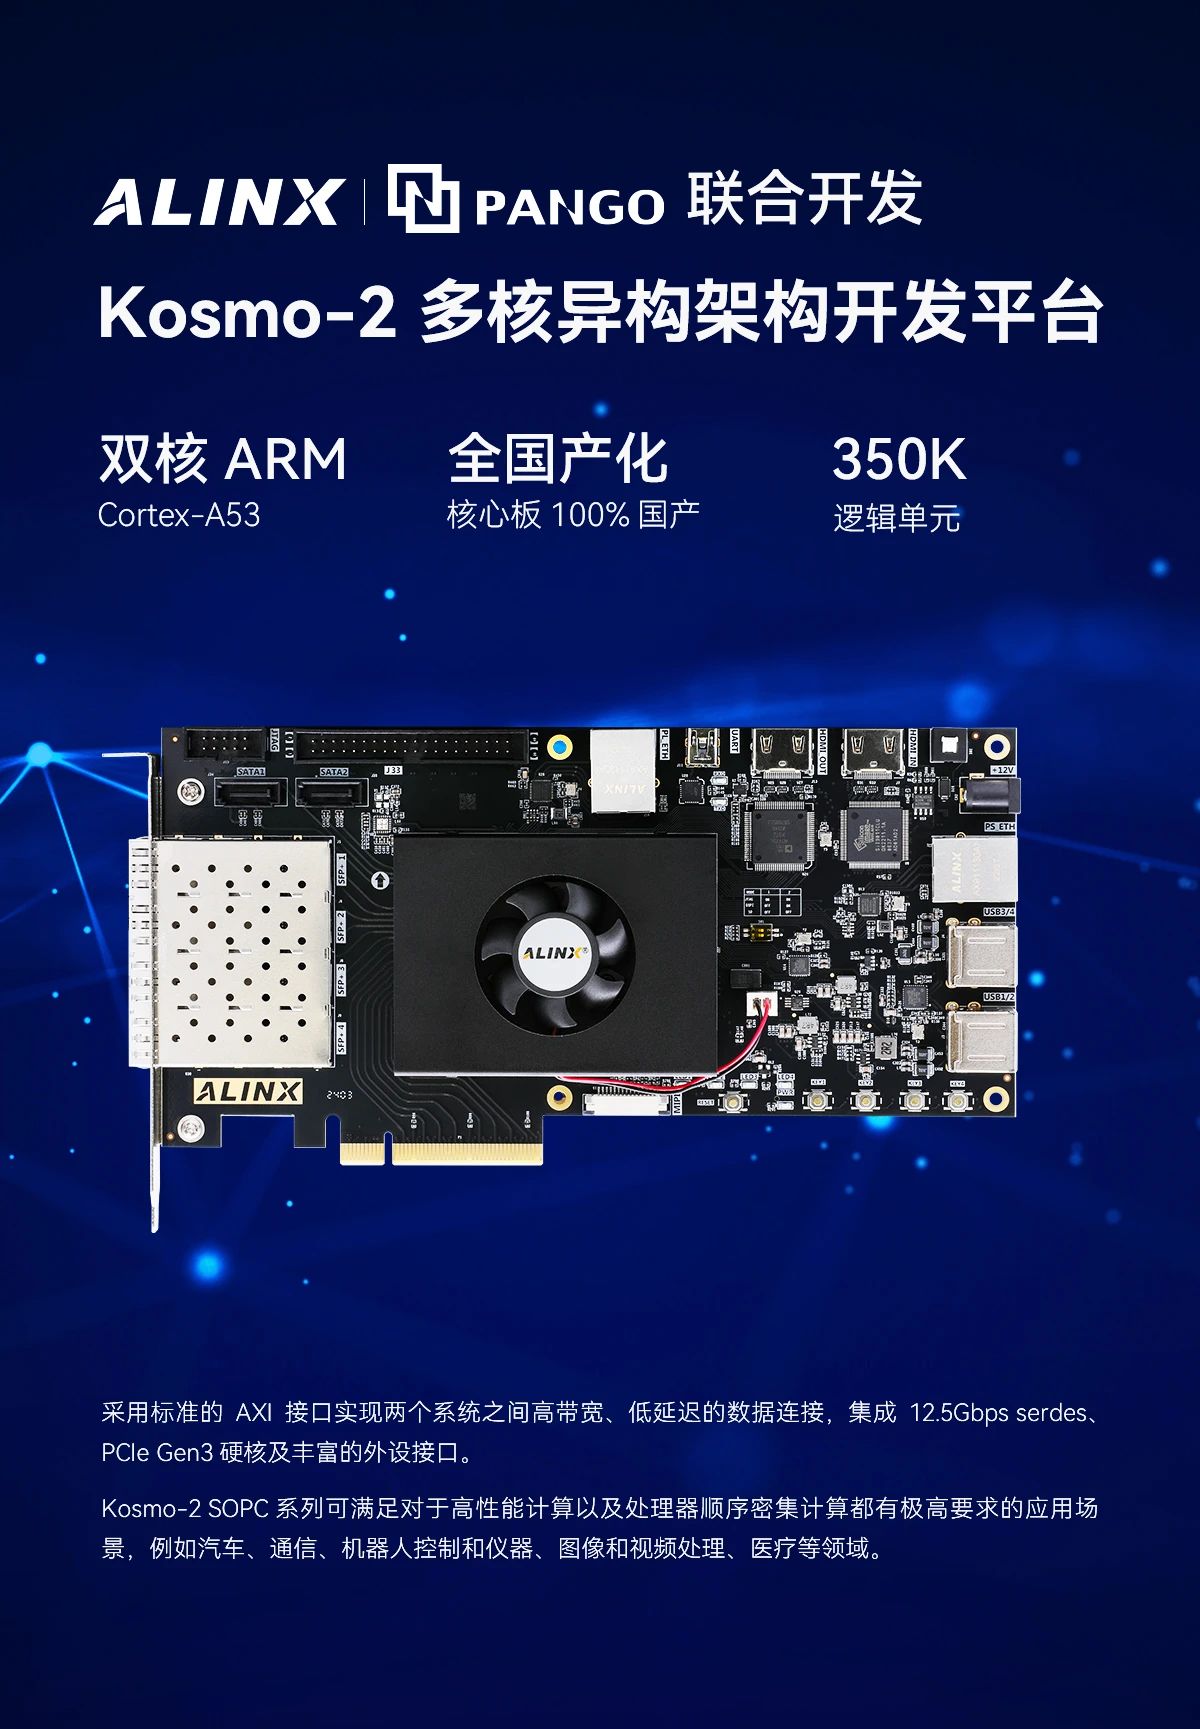 ALINX聯合紫光同創發布首款國產Kosmo-2可編程系統平臺開發套件